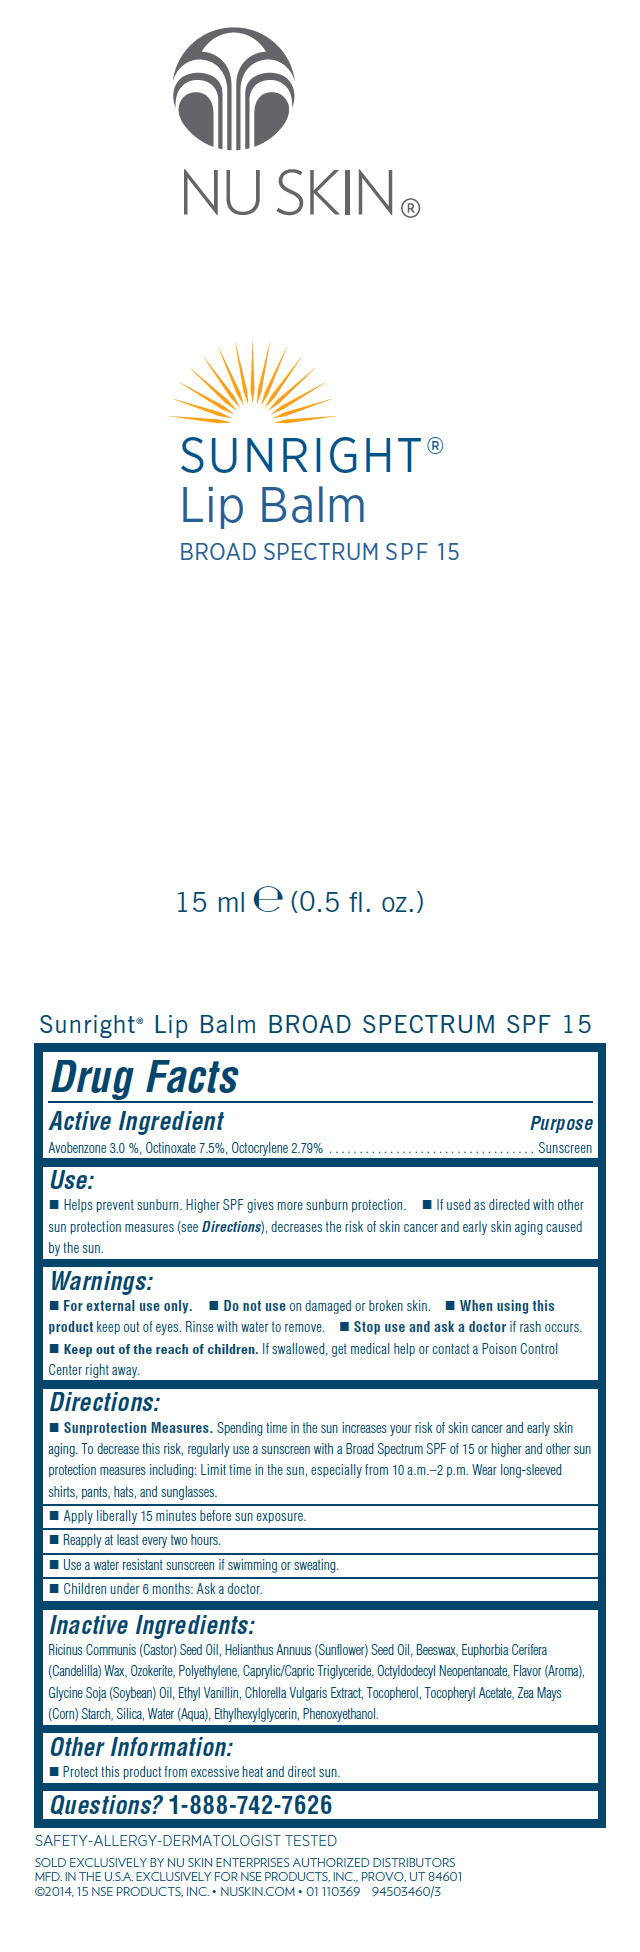 PRINCIPAL DISPLAY PANEL - 15 ml Tube Pouch Label